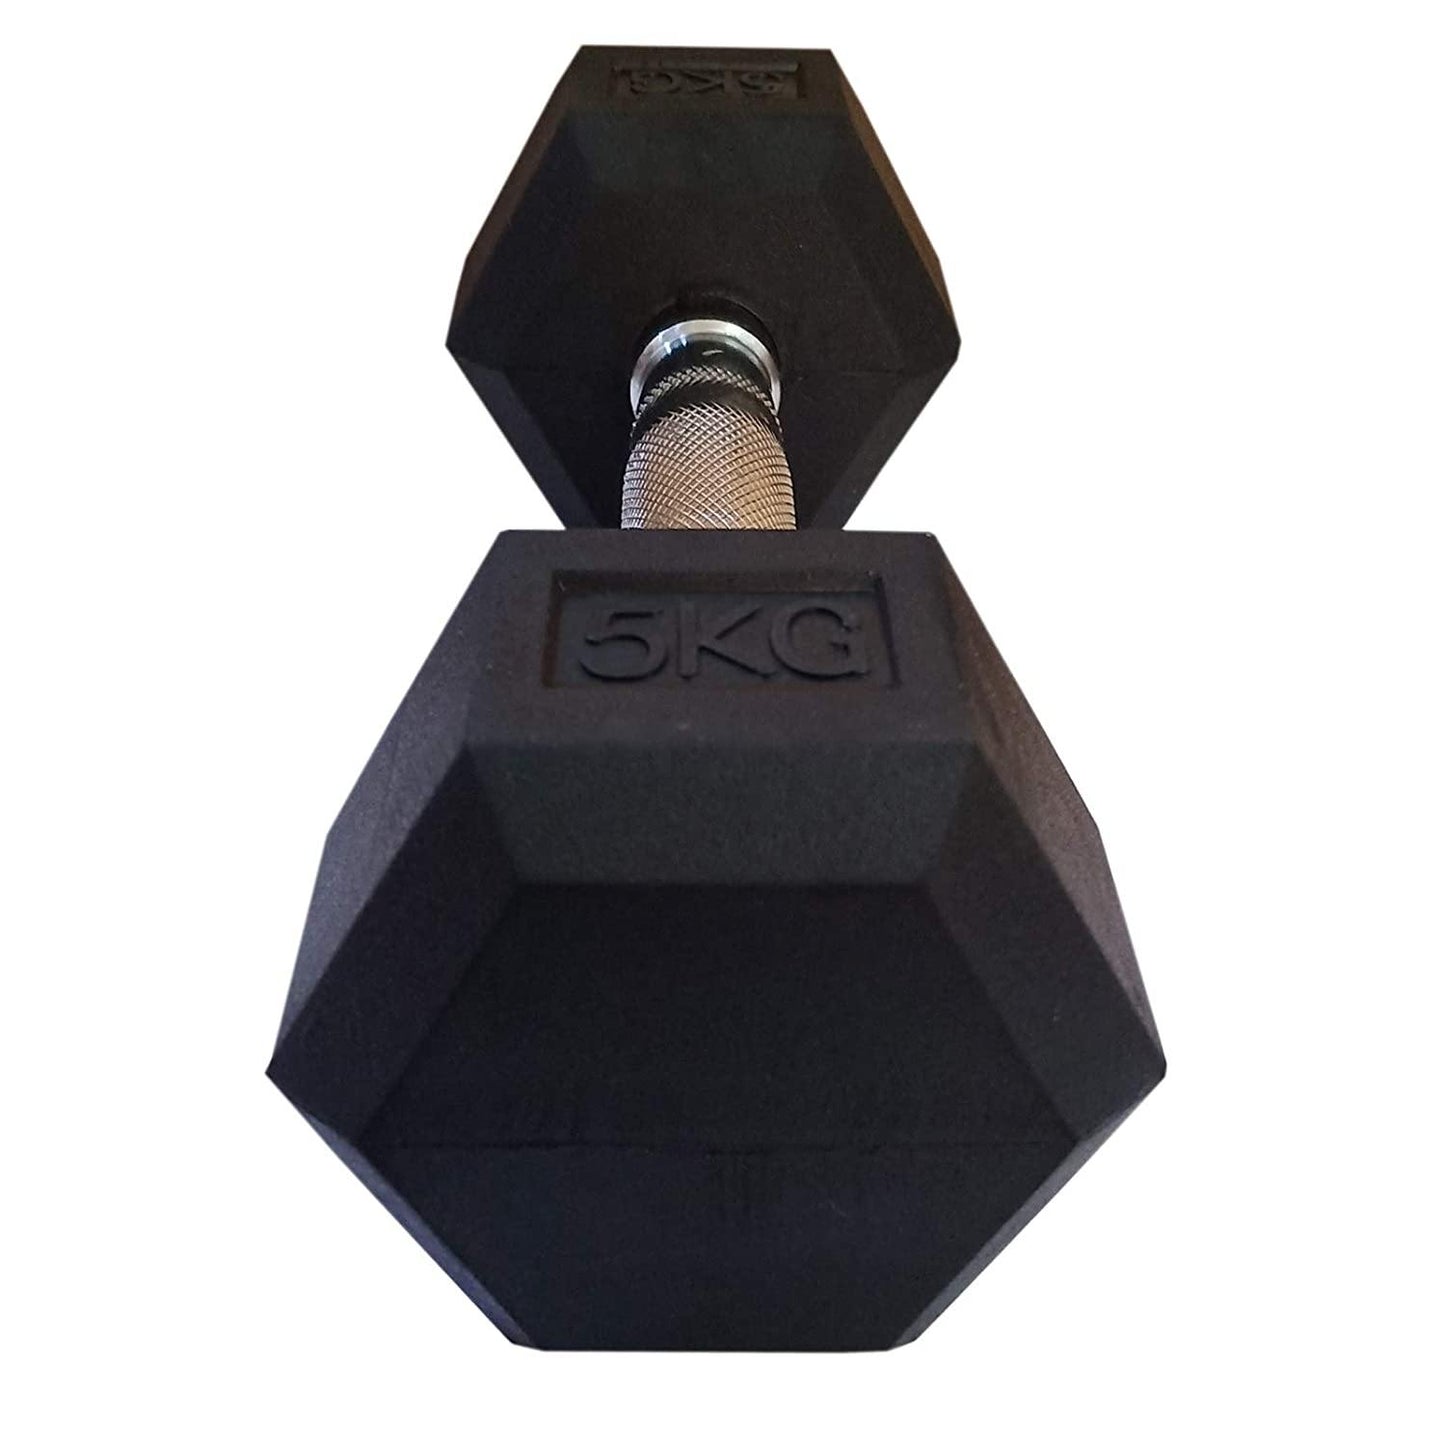 Prokick Rubber Coated Professional Exercise Hex Dumbbells - 17.5 KG (Single Piece) - Best Price online Prokicksports.com